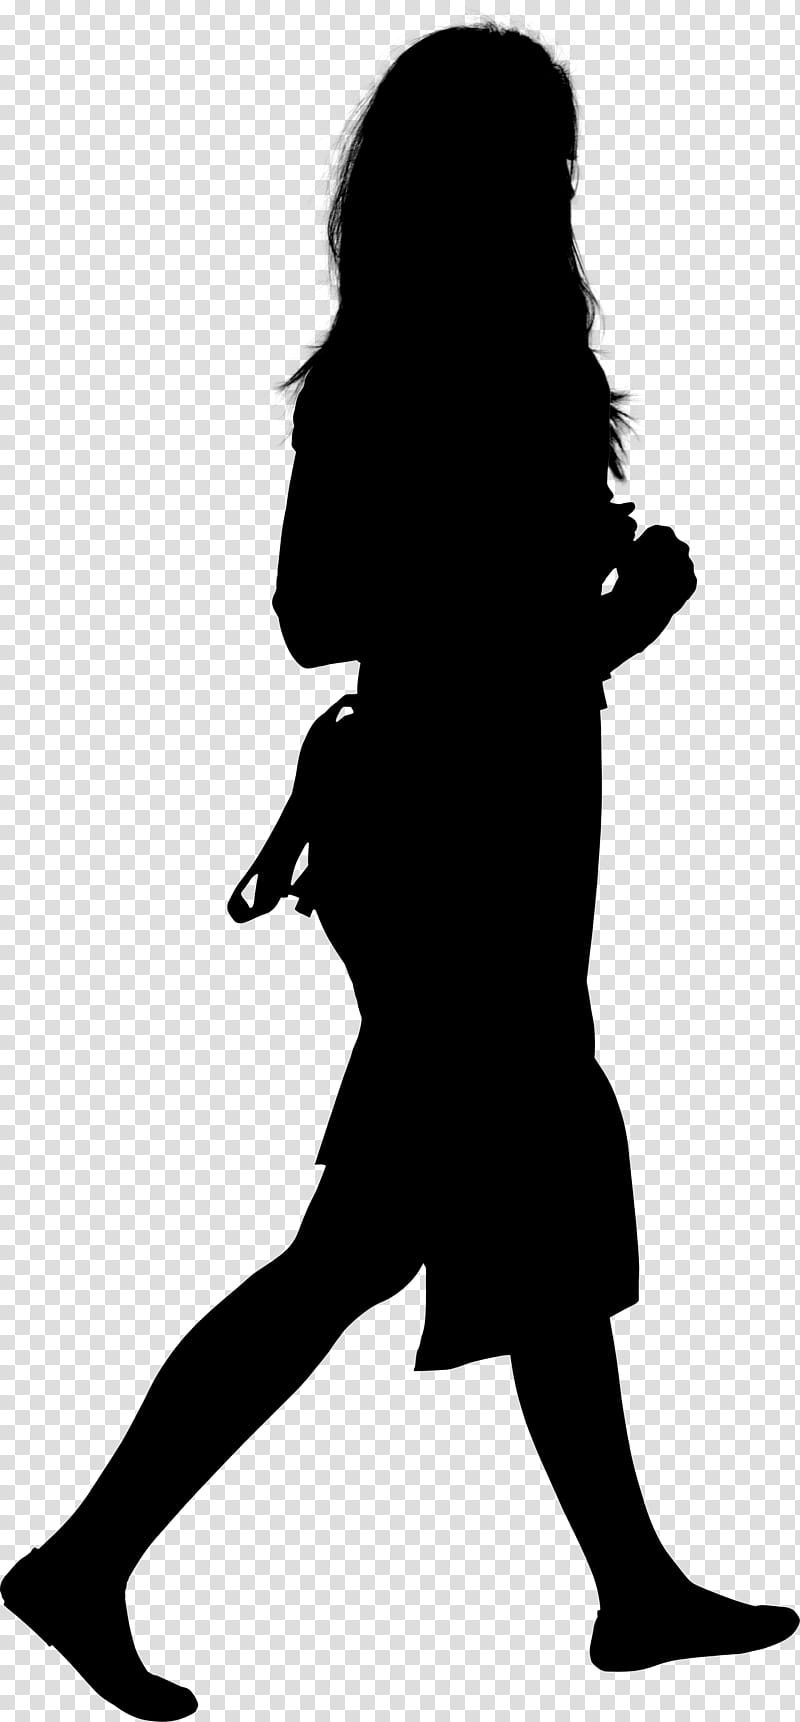 Human Silhouette, Human Figure, Human Body, Standing, Blackandwhite transparent background PNG clipart